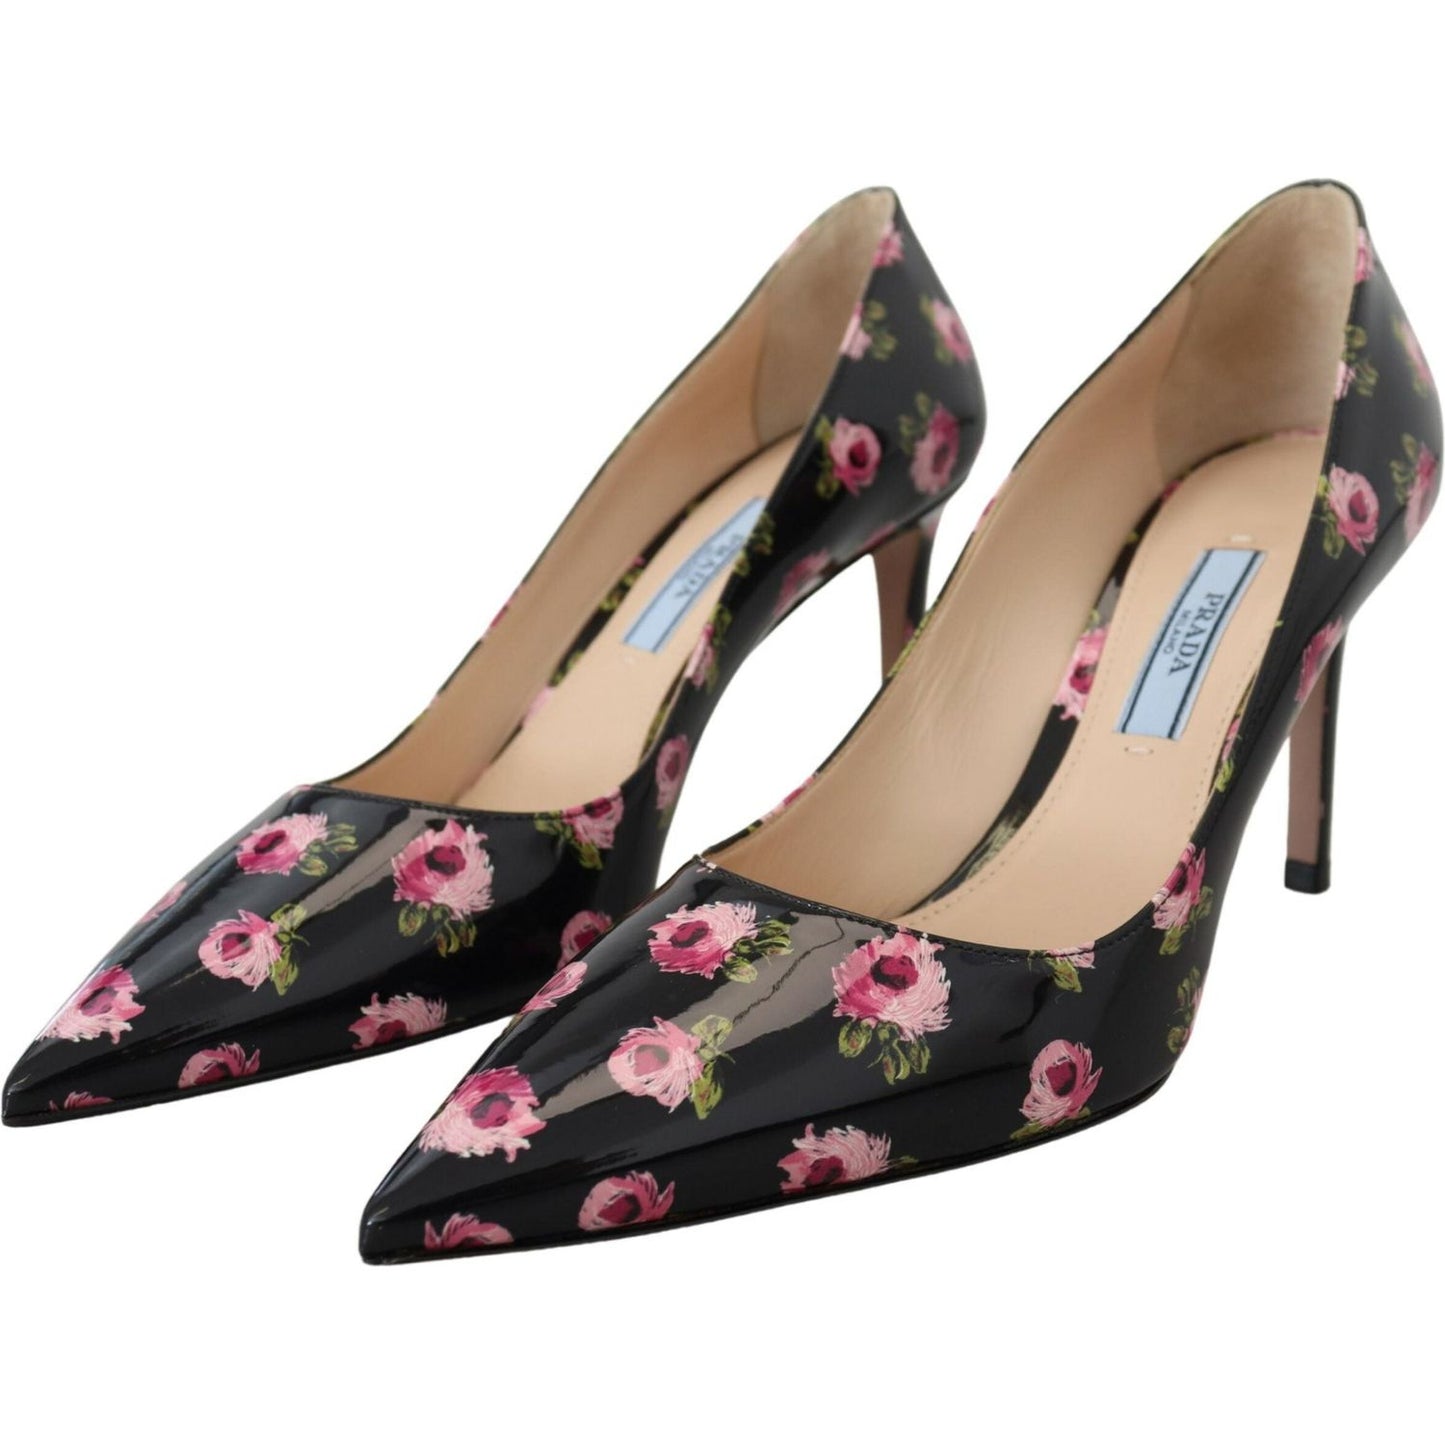 Prada Elegant Floral Print Leather Pumps black-leather-floral-heels-stilettos-pumps